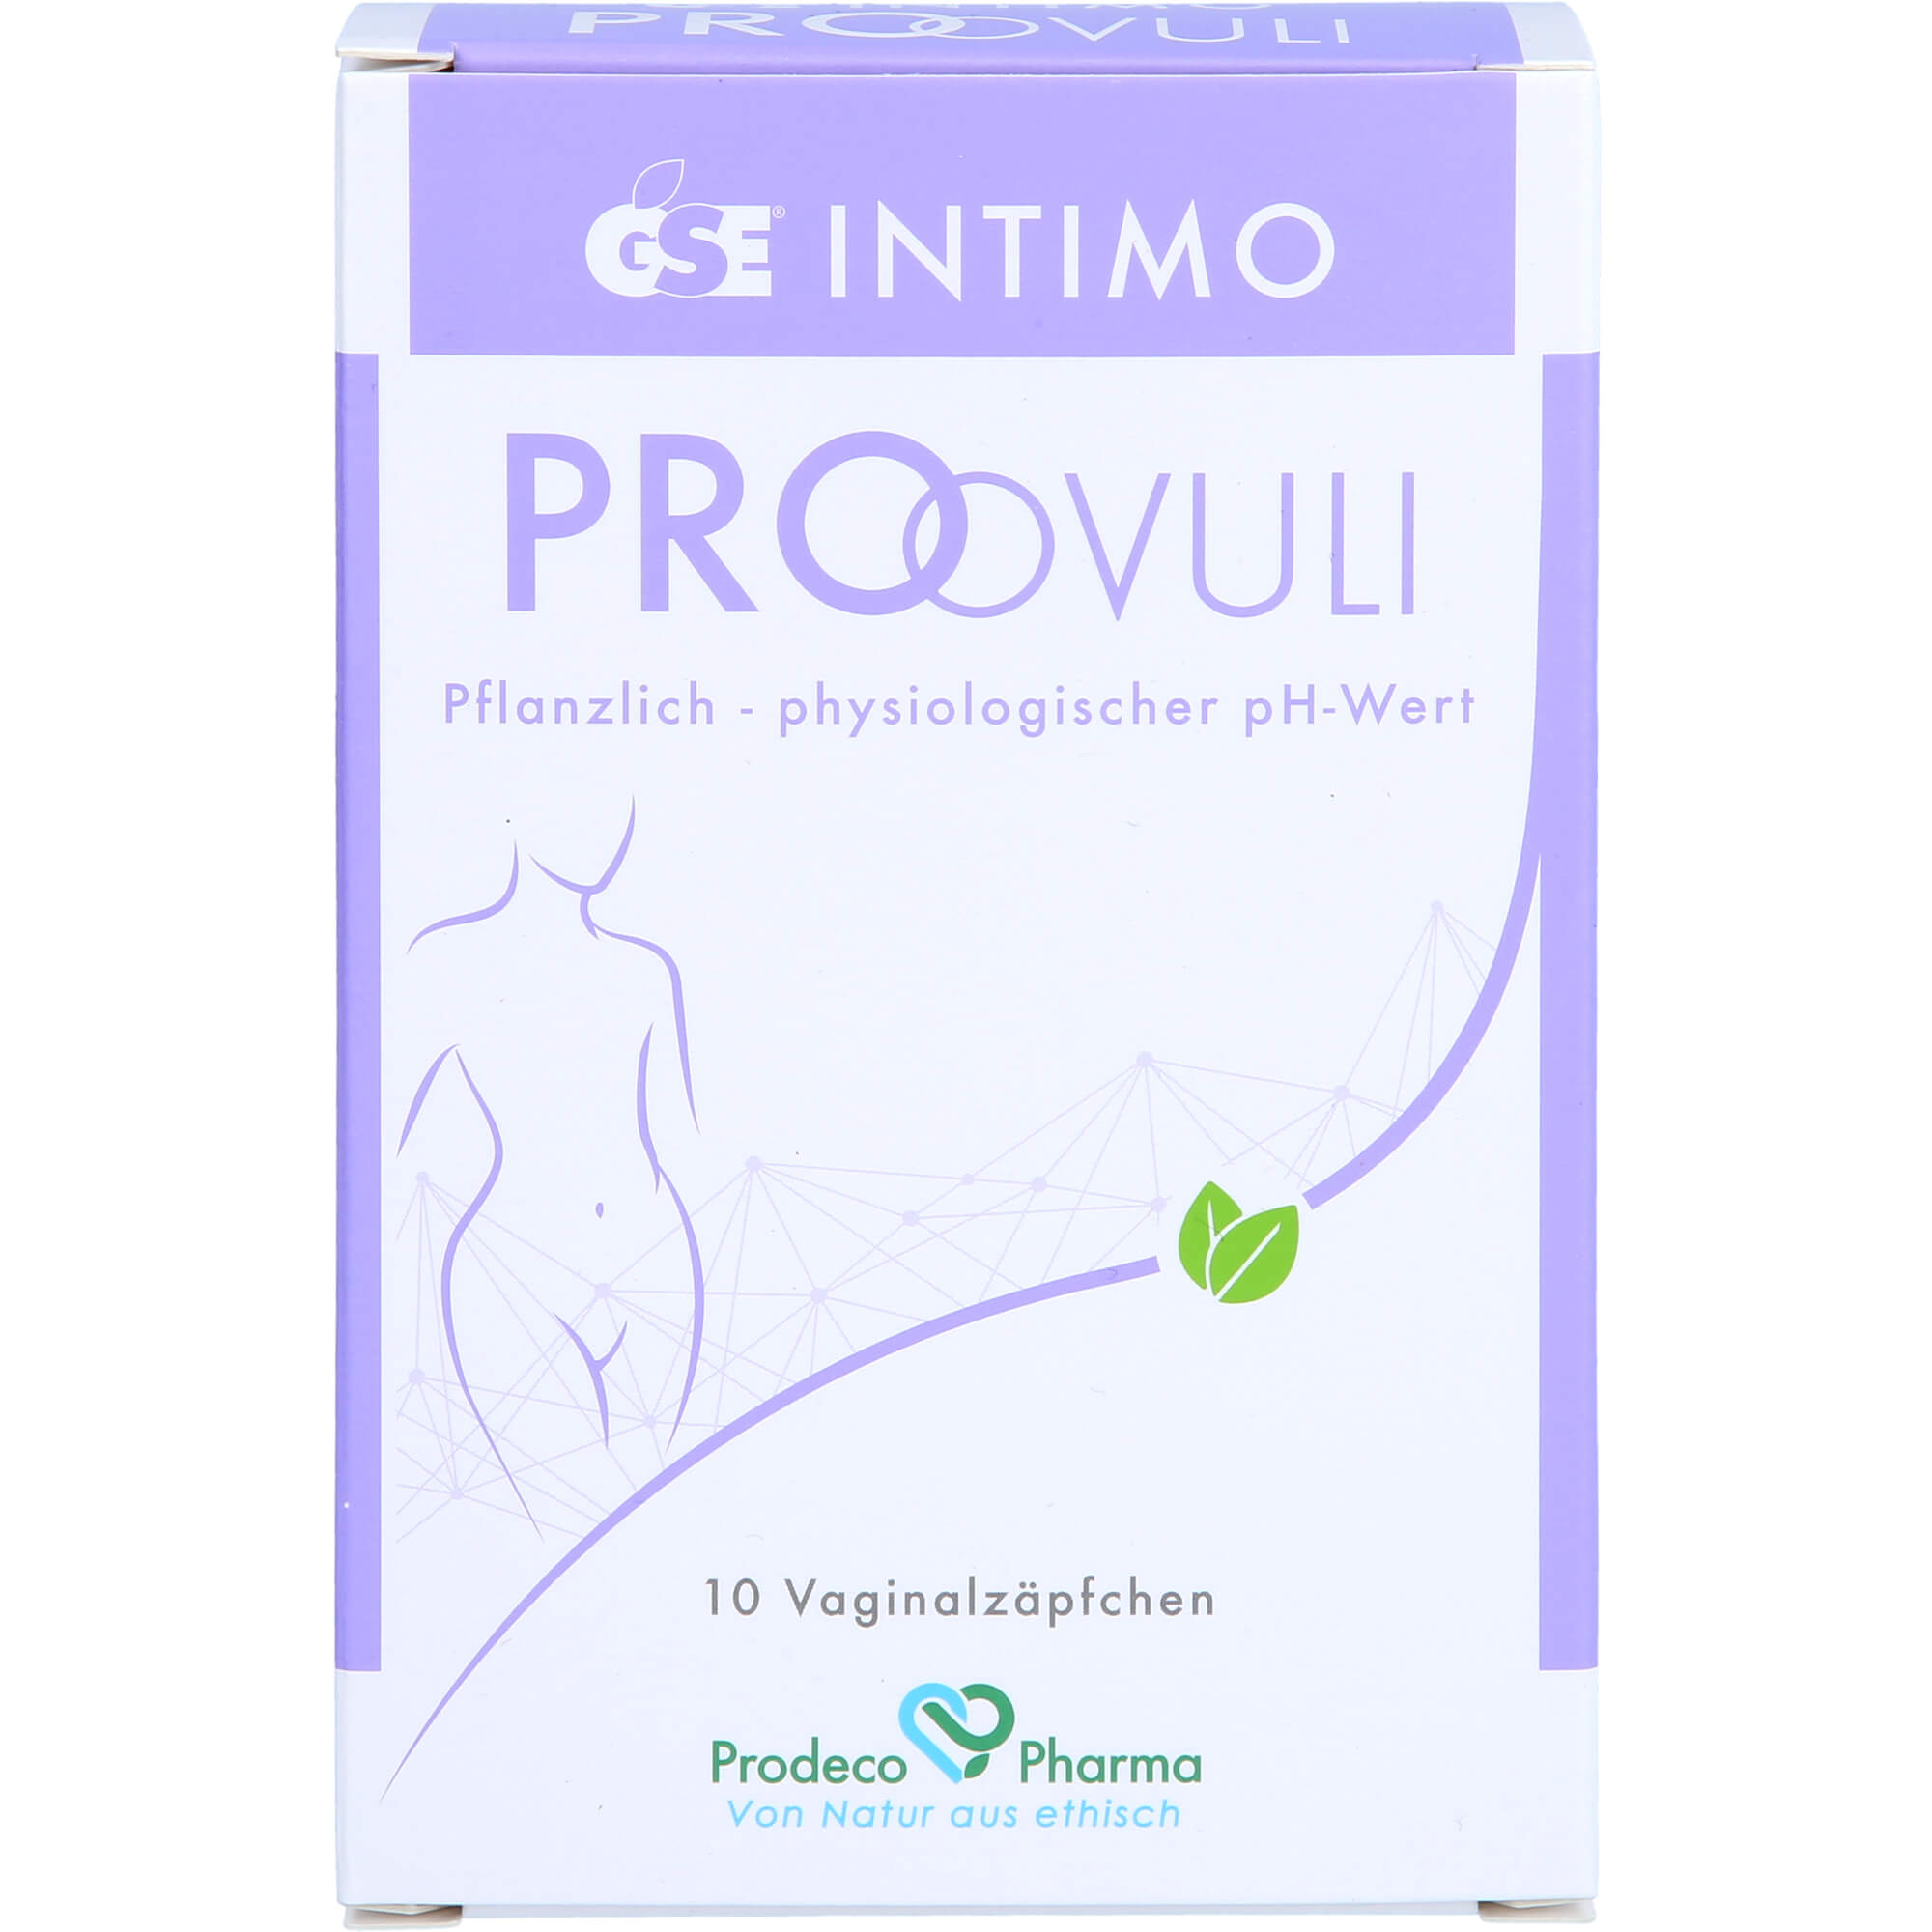 GSE intimo Pro-Ovuli Vaginalsuppositorien